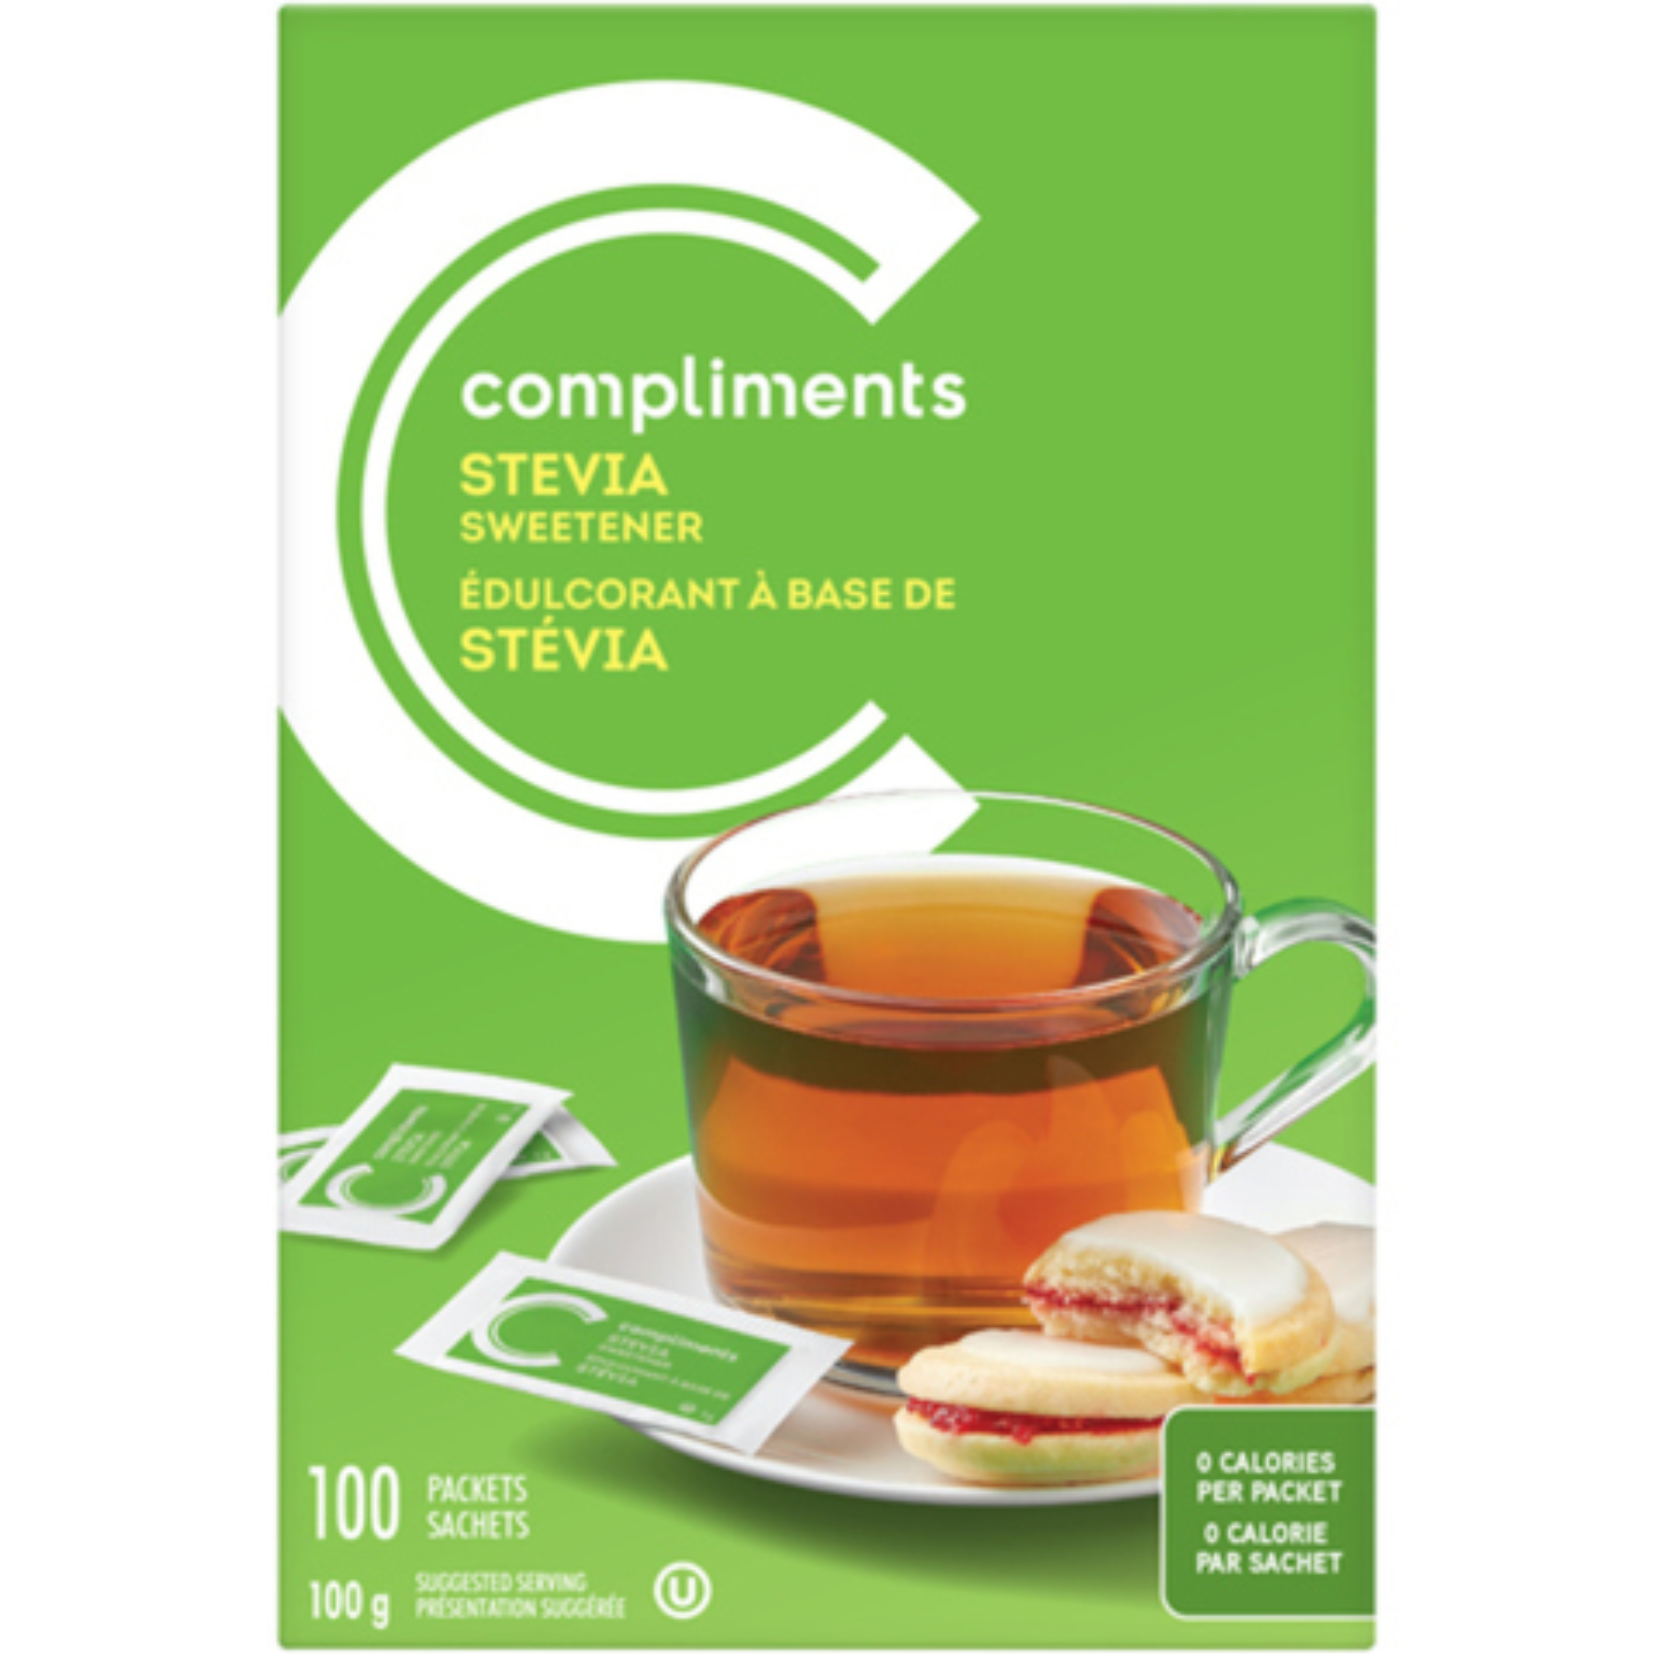 Compliments Stevia Sweetener 100g